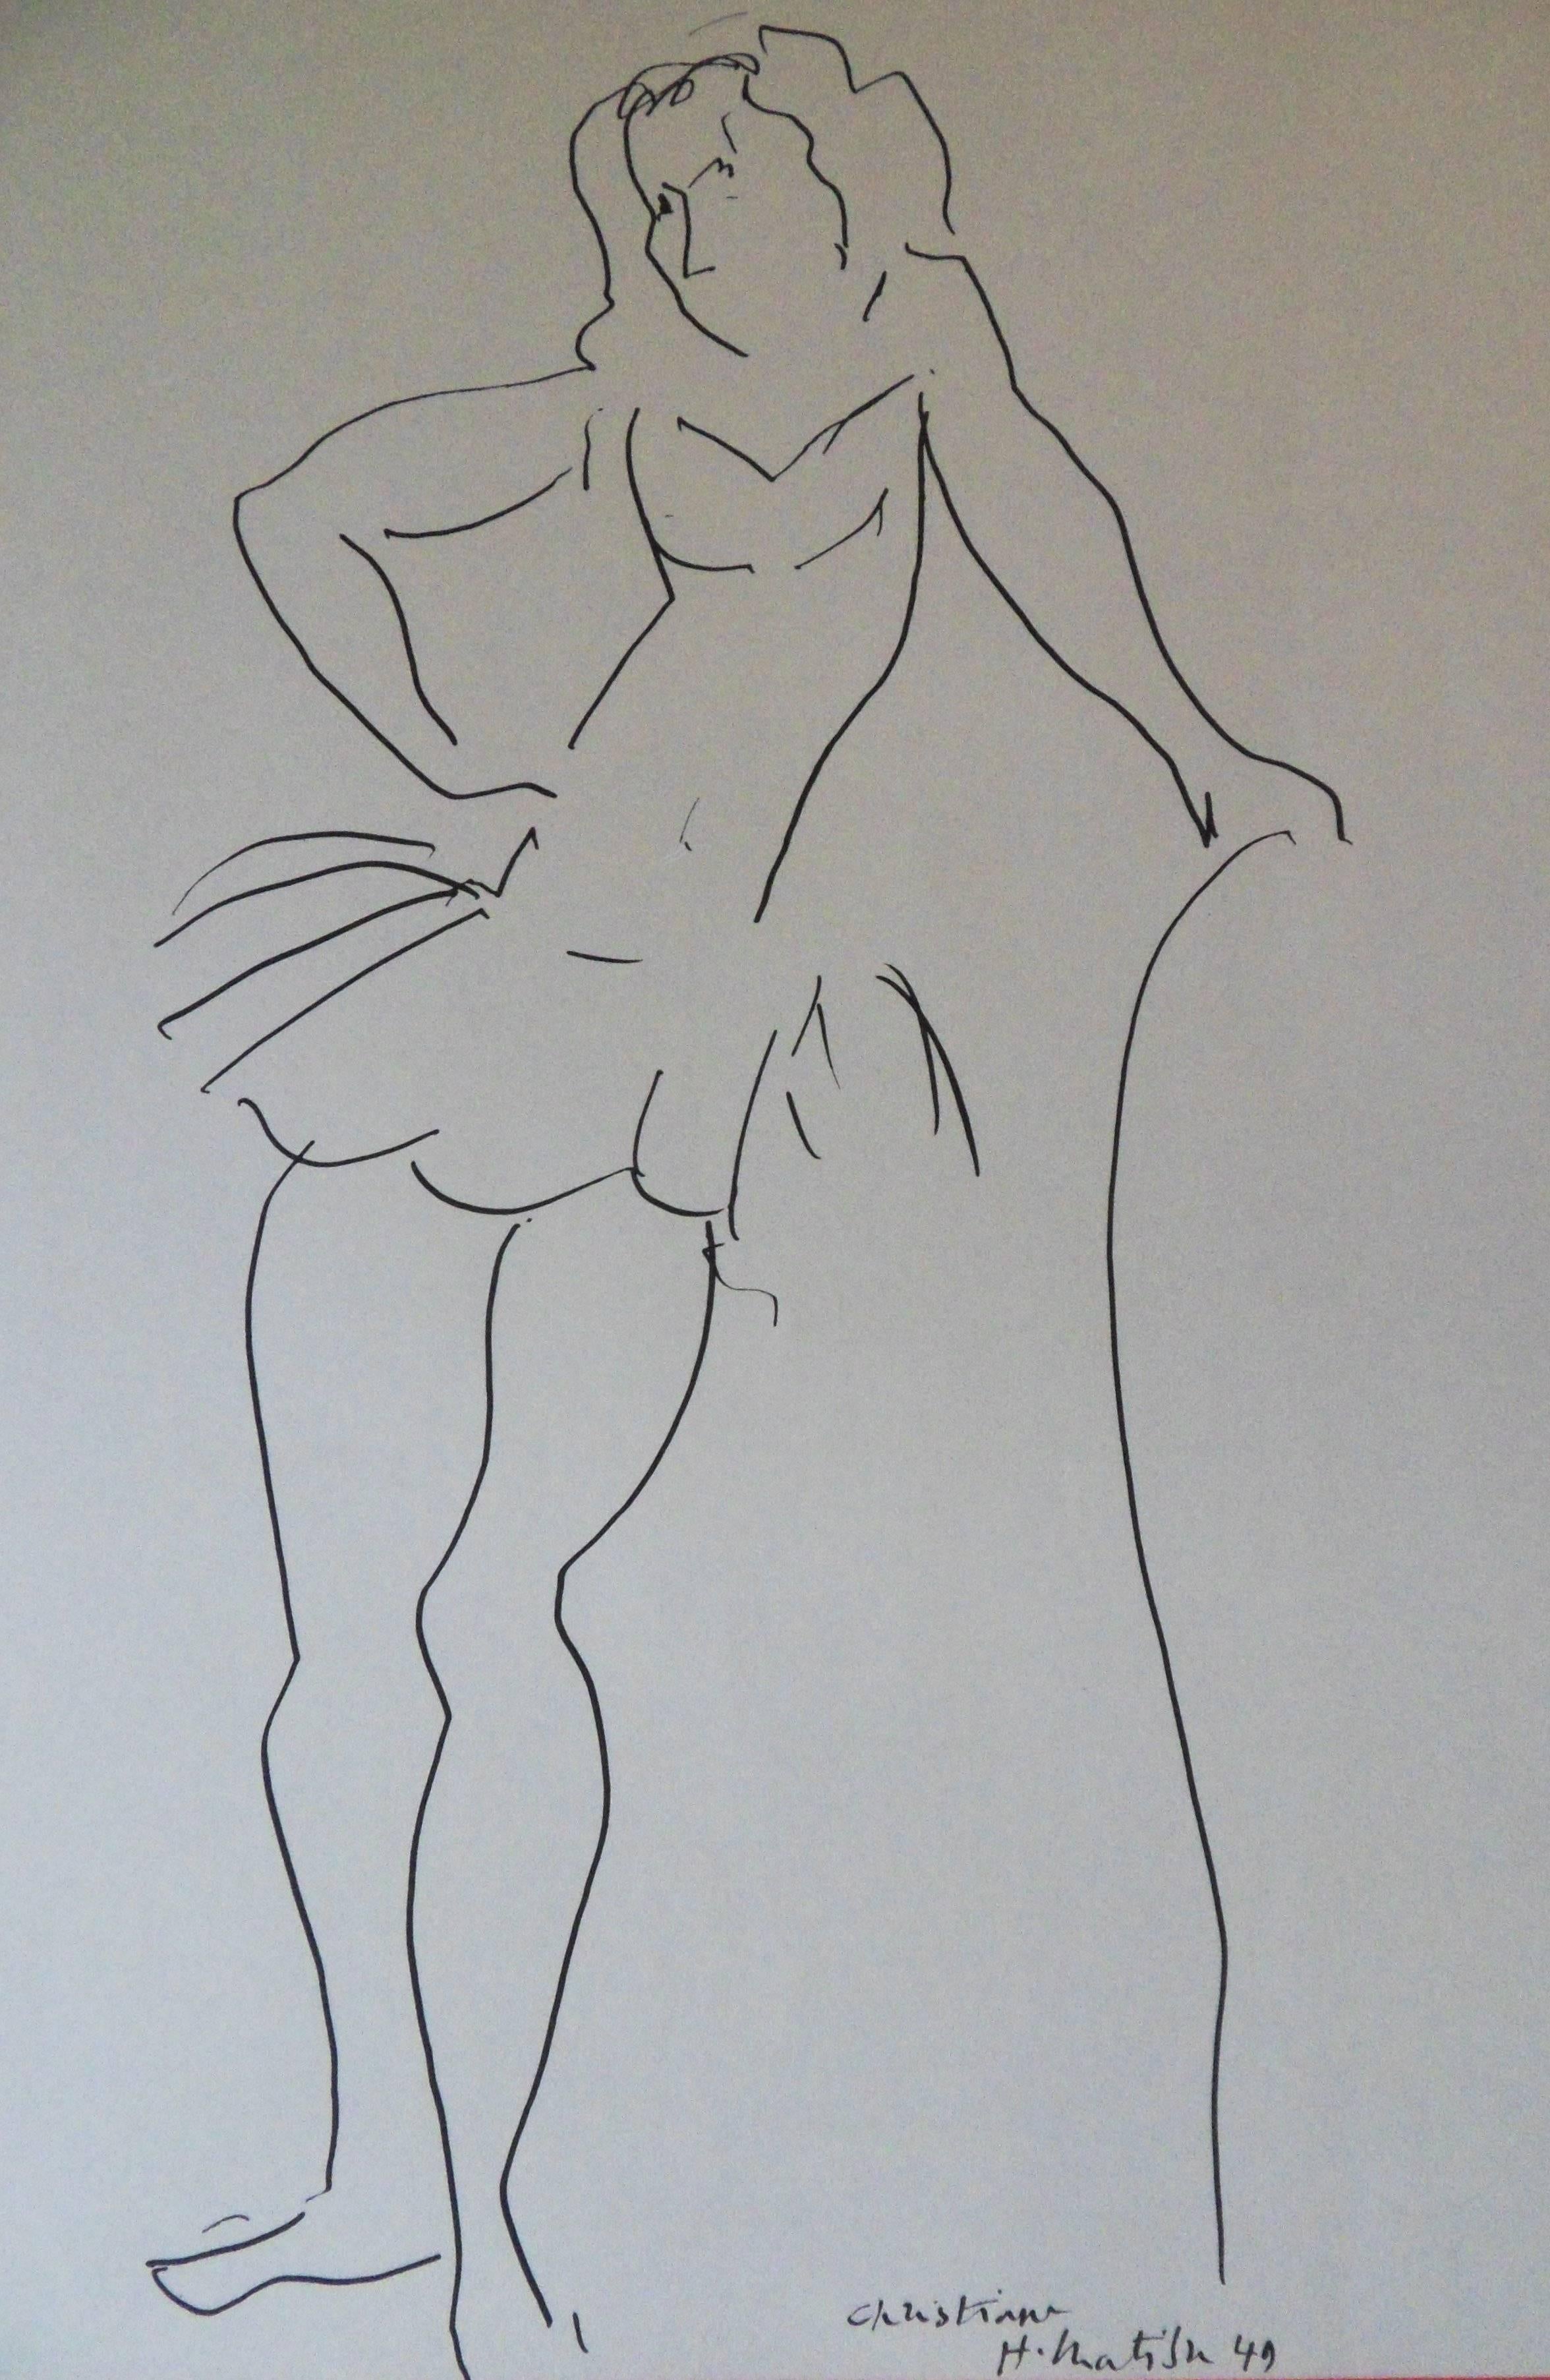 Christiane : Dancer - Lithograph Poster - Galerie Jacques Benador #Mourlot - Modern Print by Henri Matisse